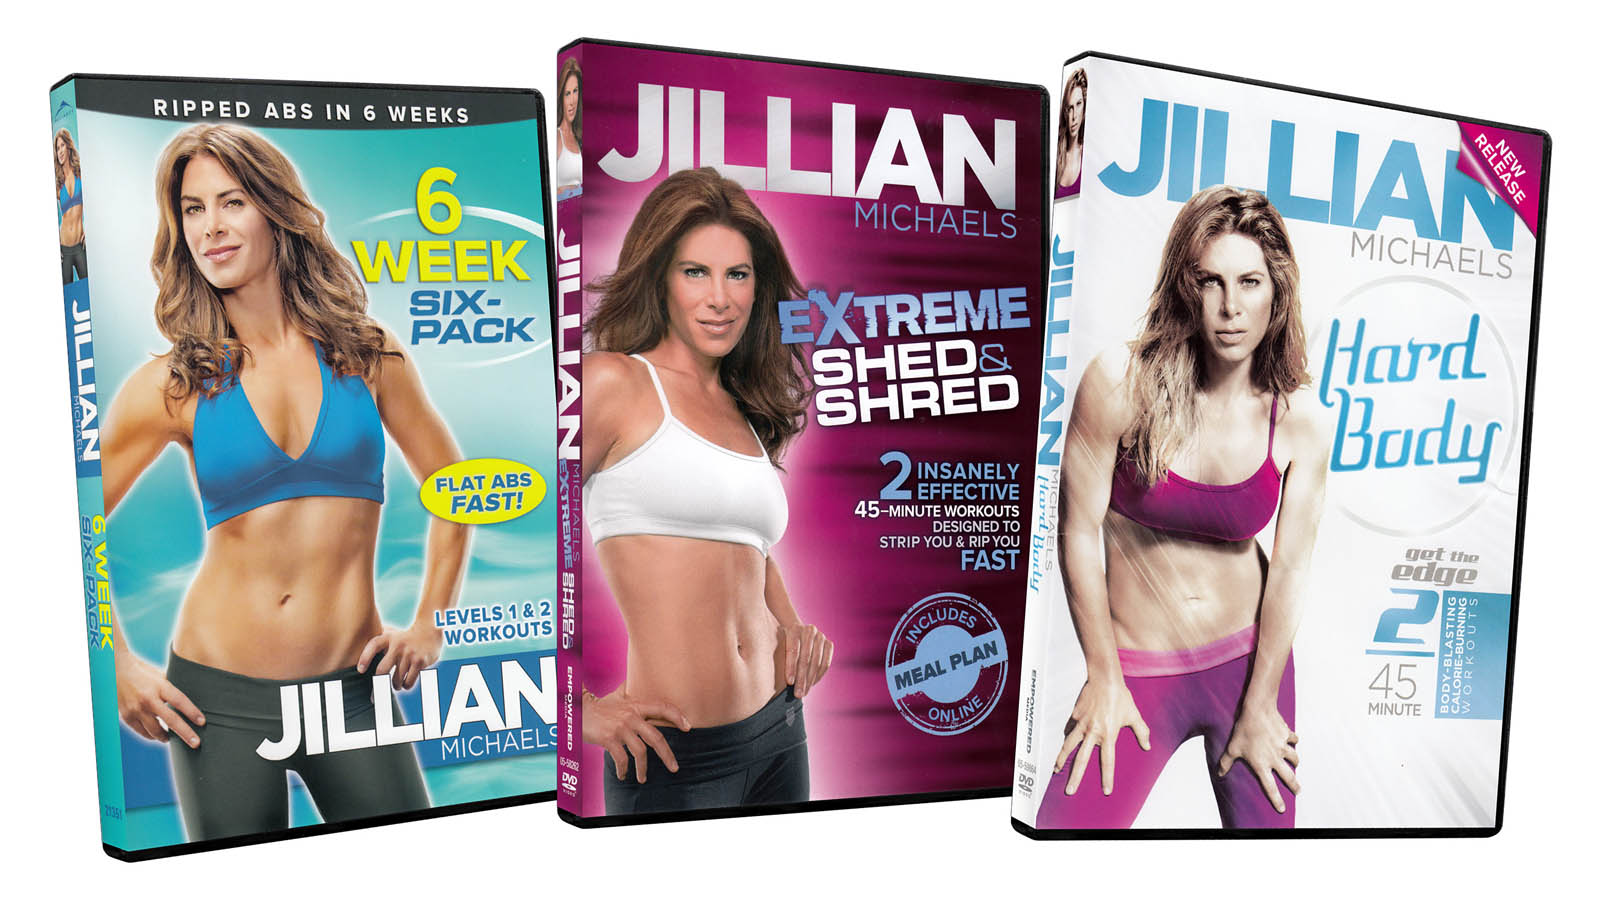 Jillian Michaels (6 Week Six-Pack / Extreme Shed and Shred / Hard